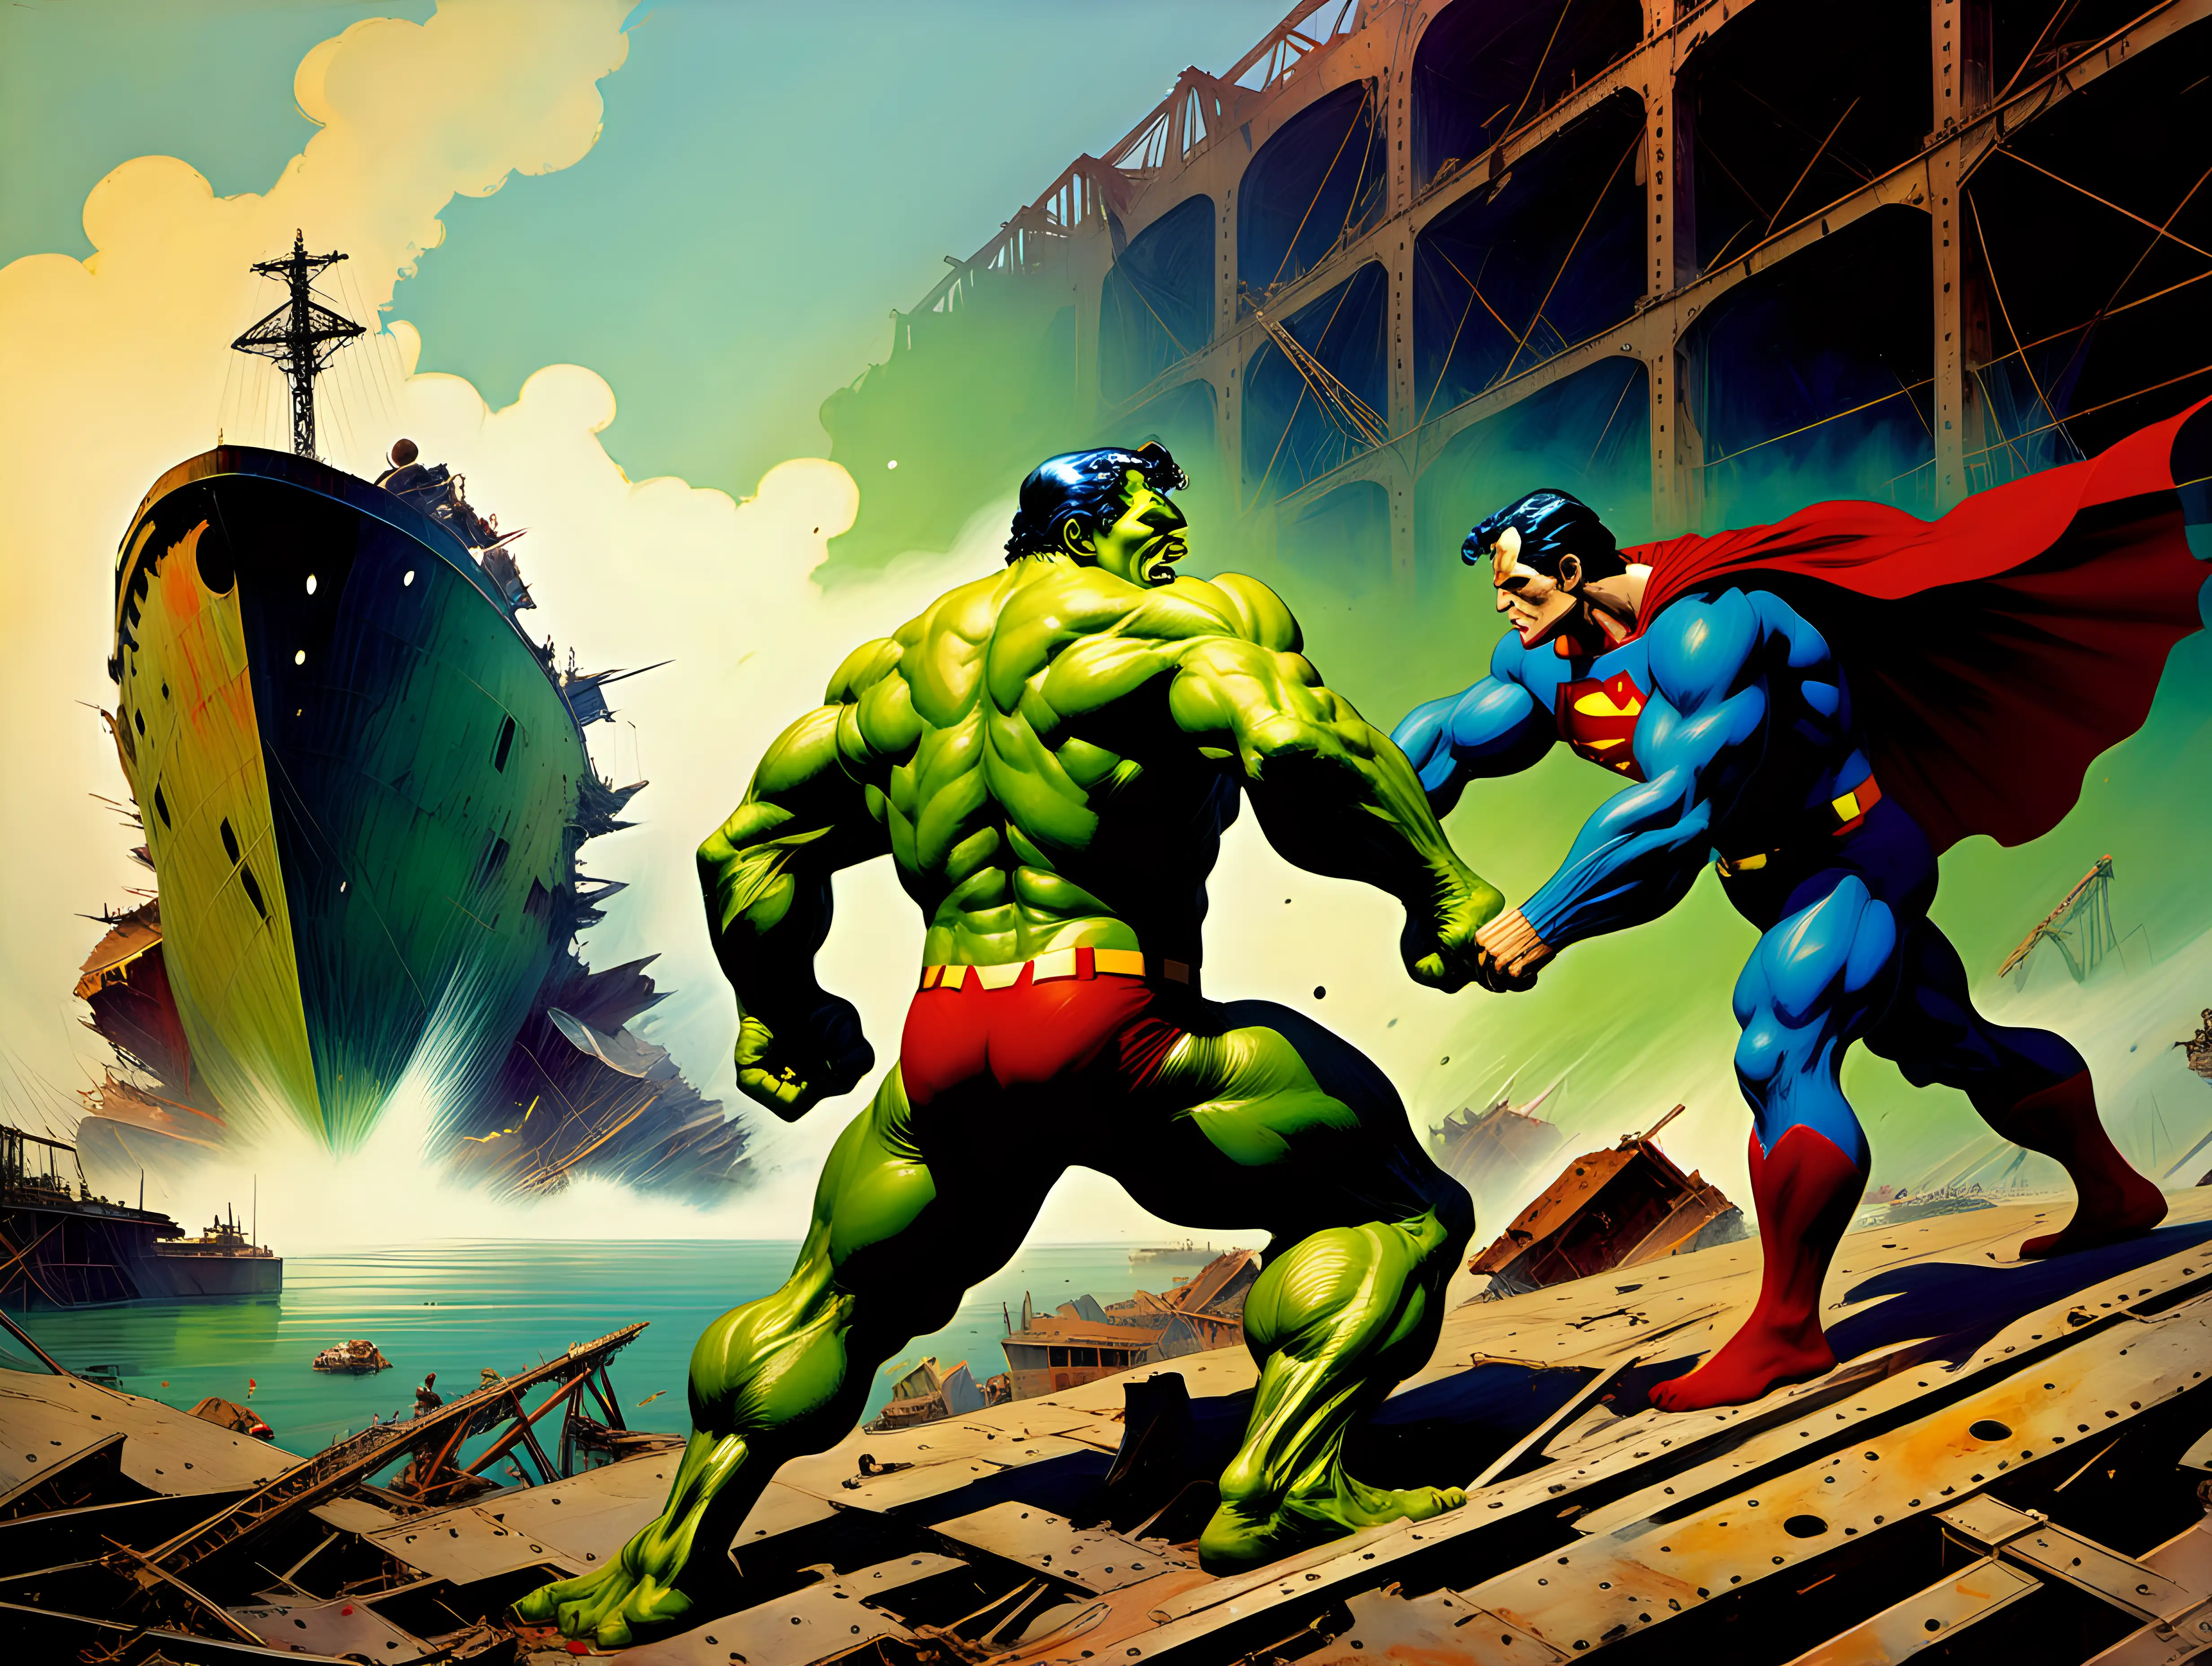 Epic Battle Superman vs Hulk in a Desolate Shipyard